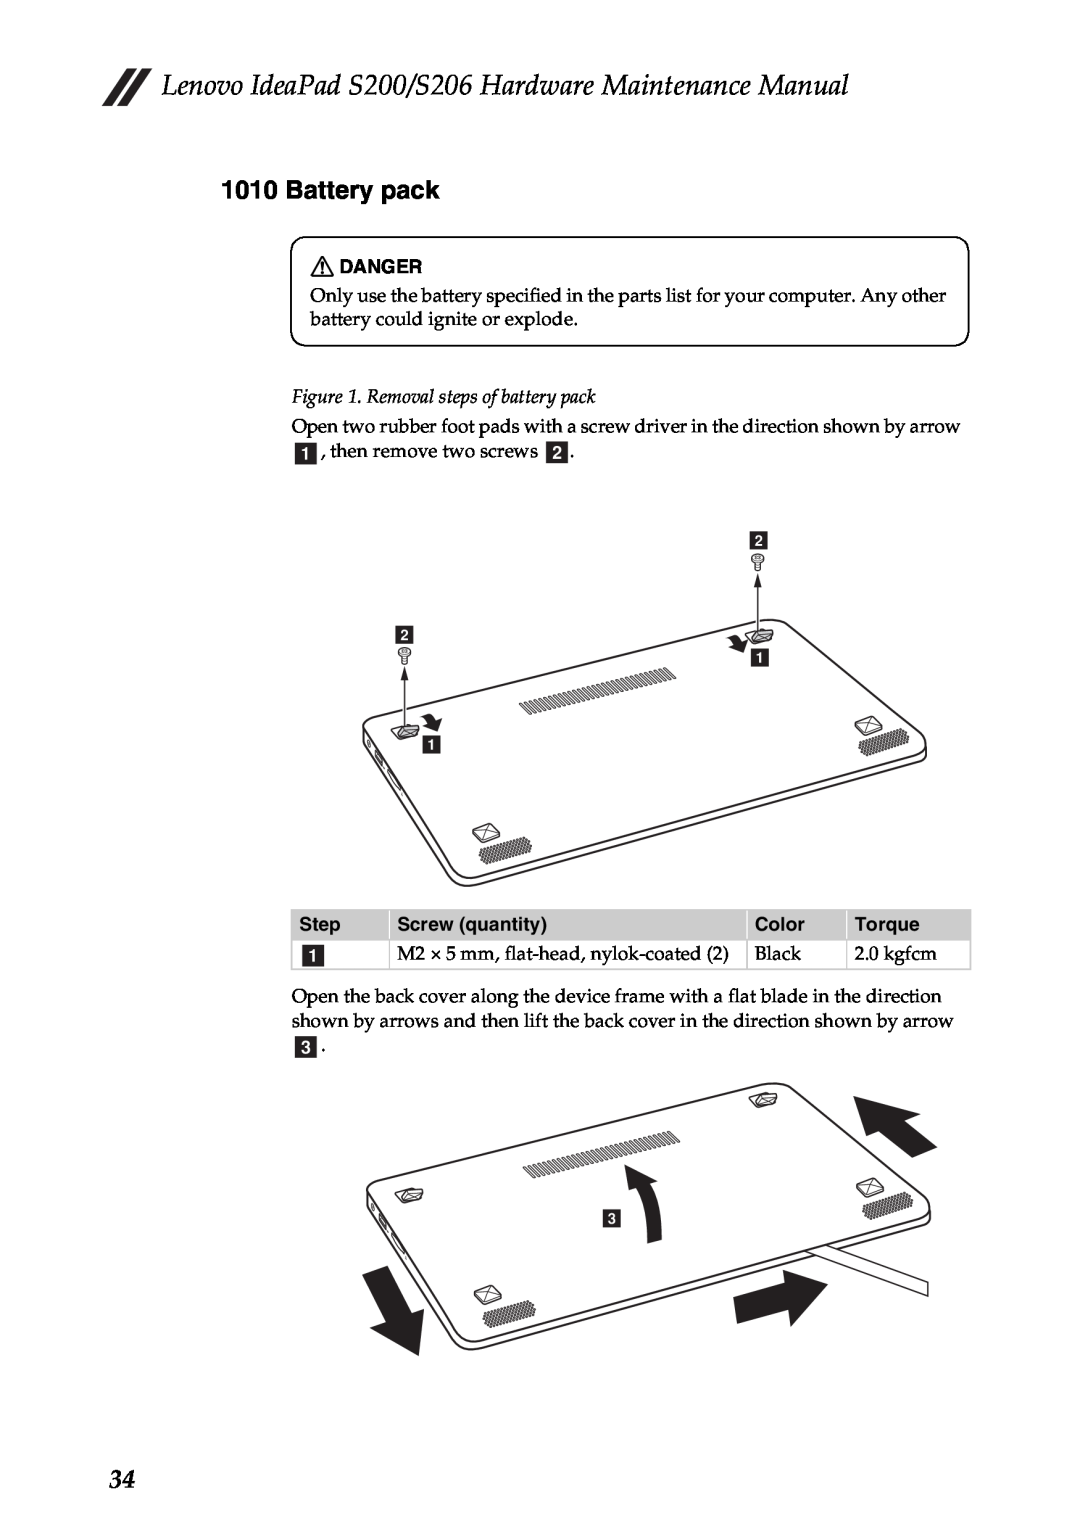 Lenovo S206, S200 manual Battery pack, Removal steps of battery pack 